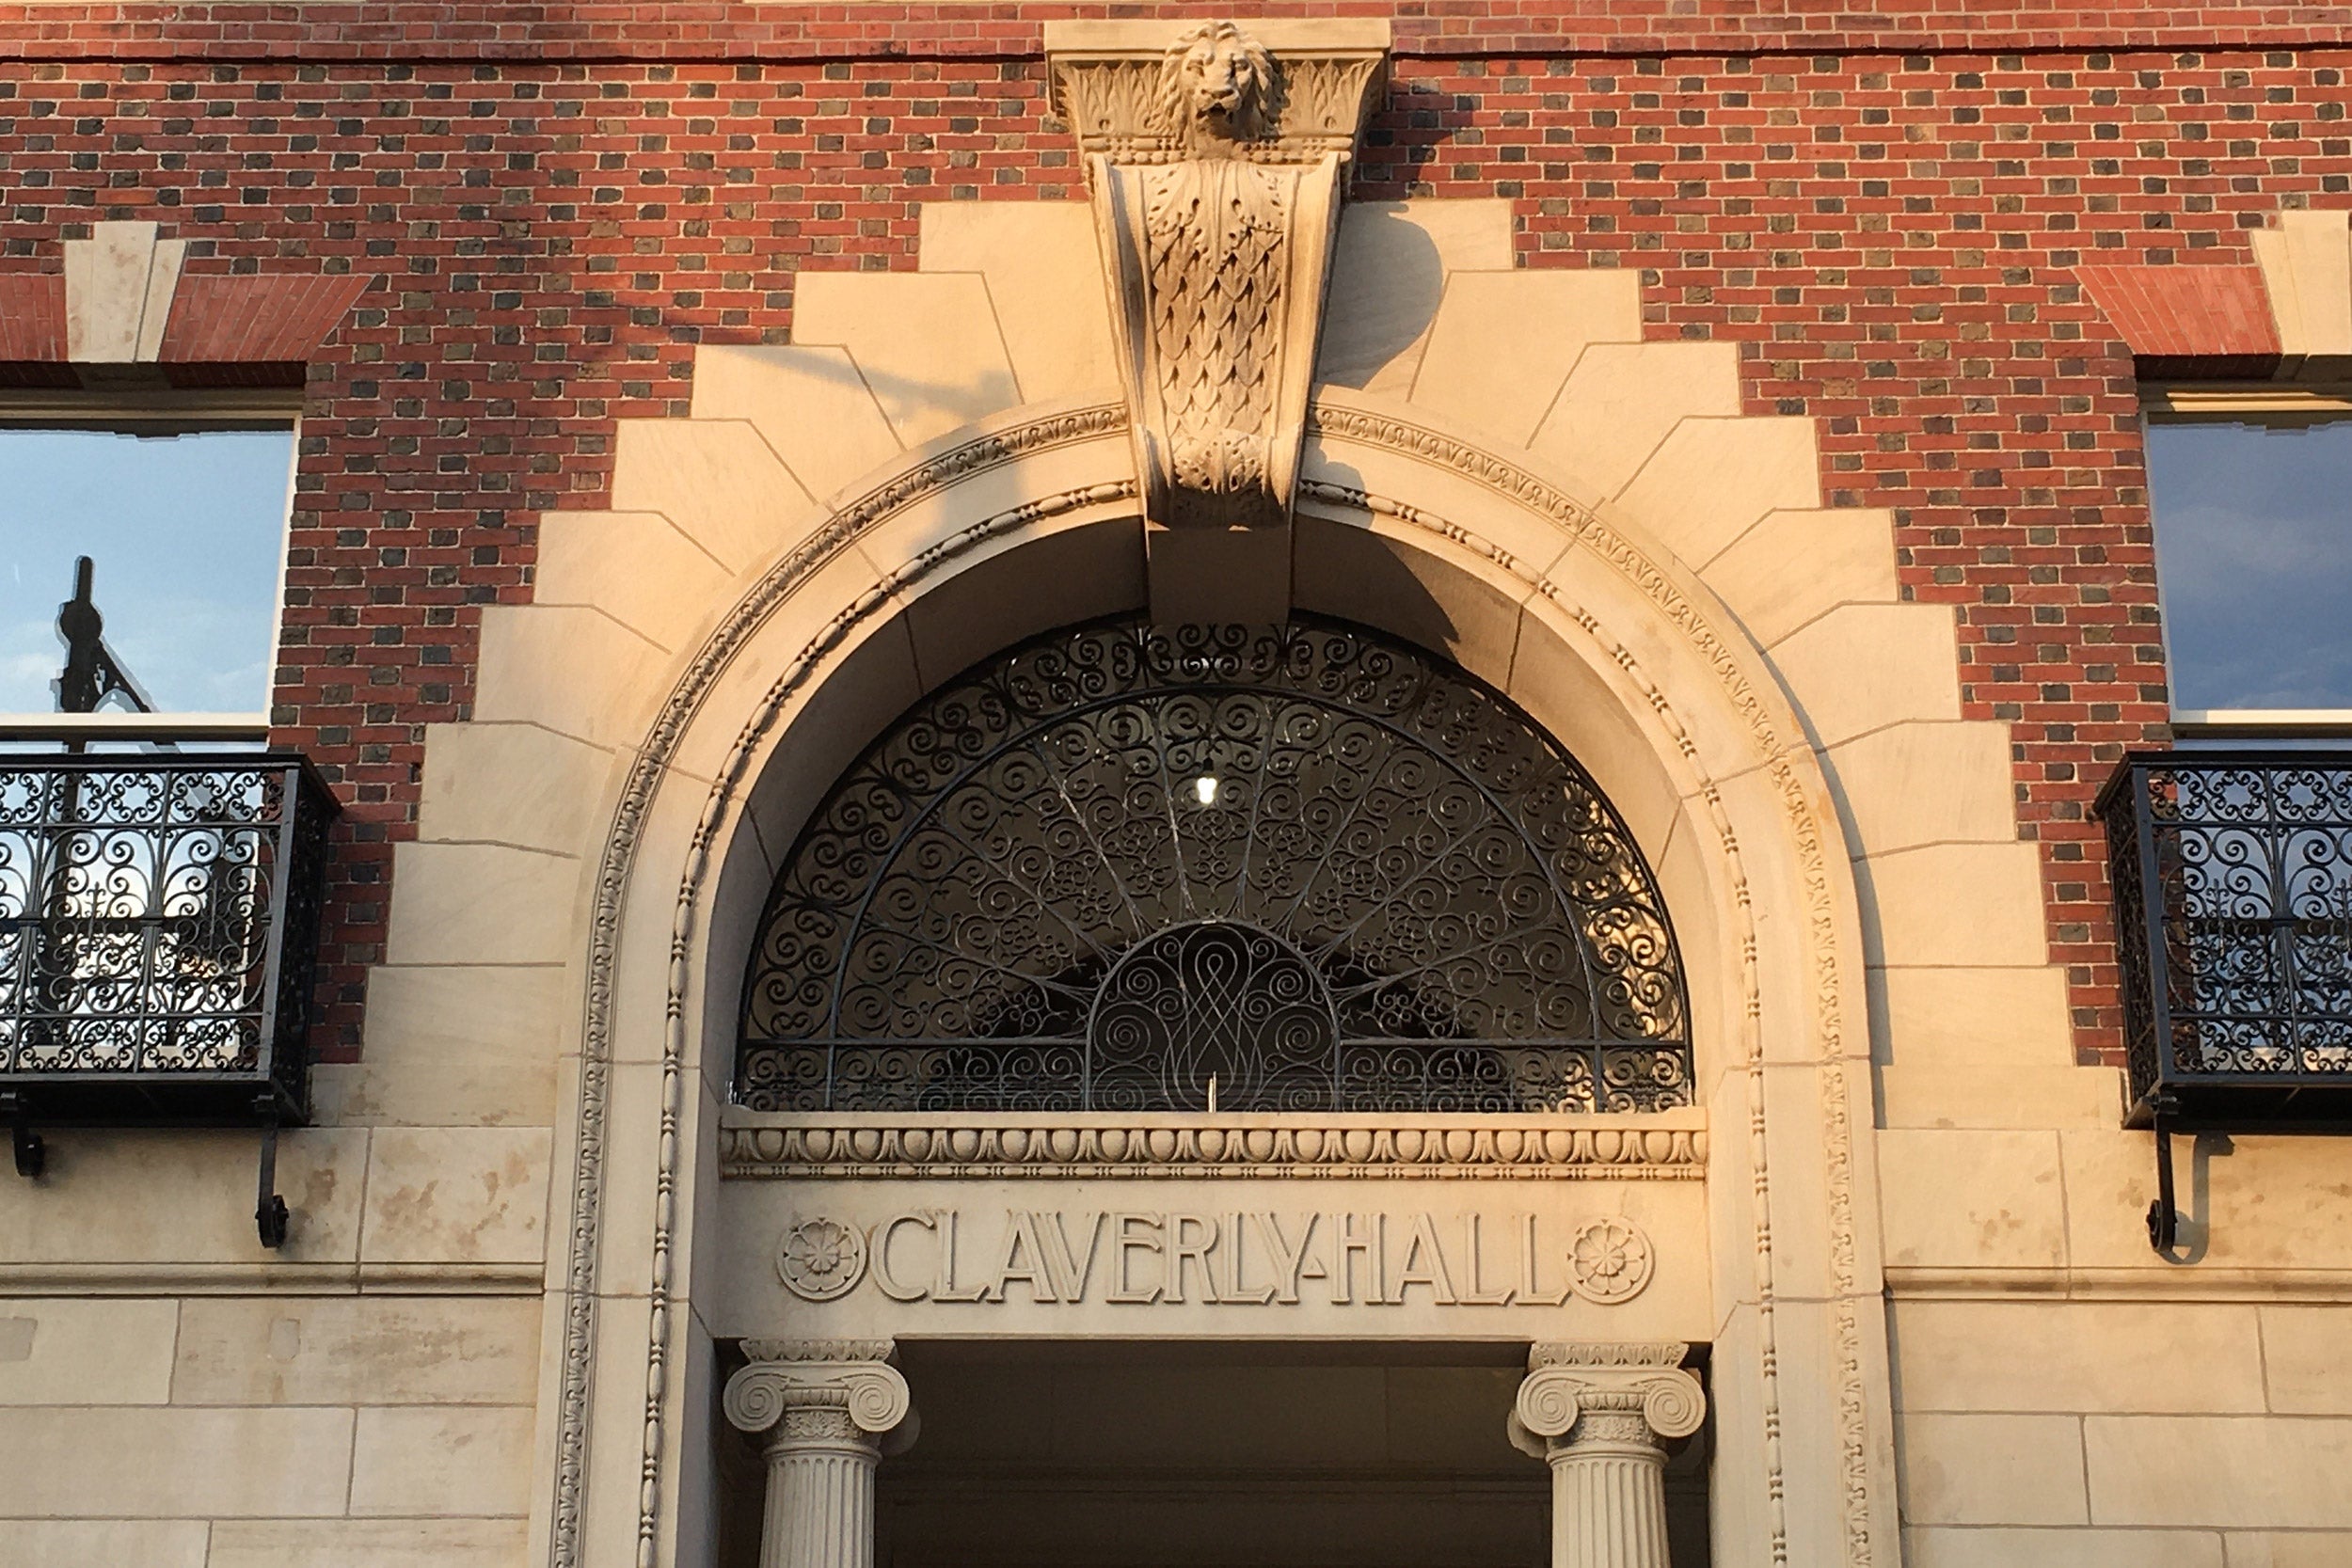 Claverly Hall exterior.